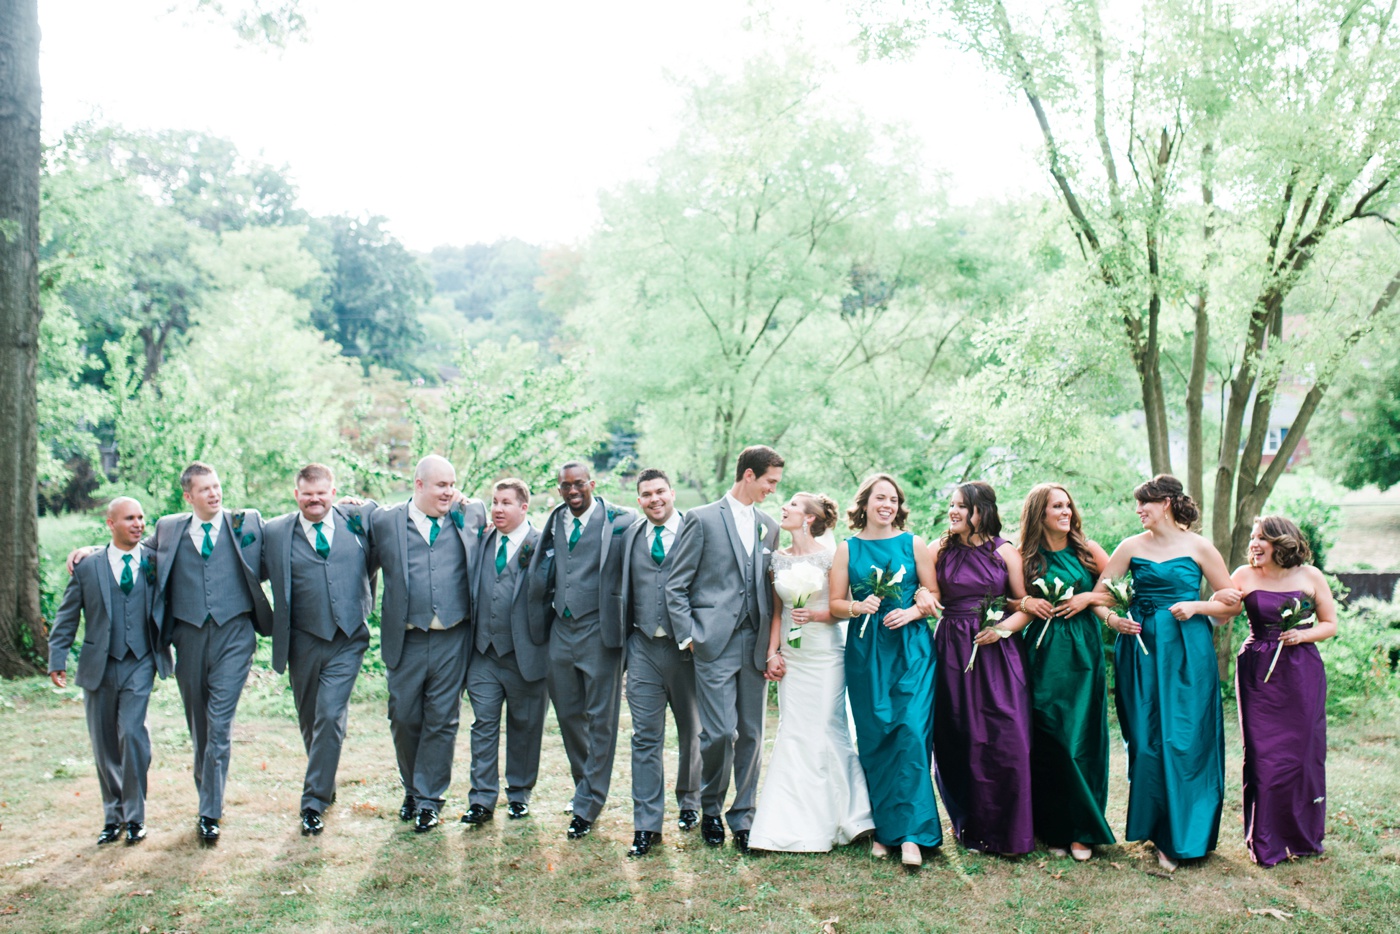 Goffle Brook Park Wedding Party Photos - Jewel Tone Mixed Bridesmaid Dresses photo